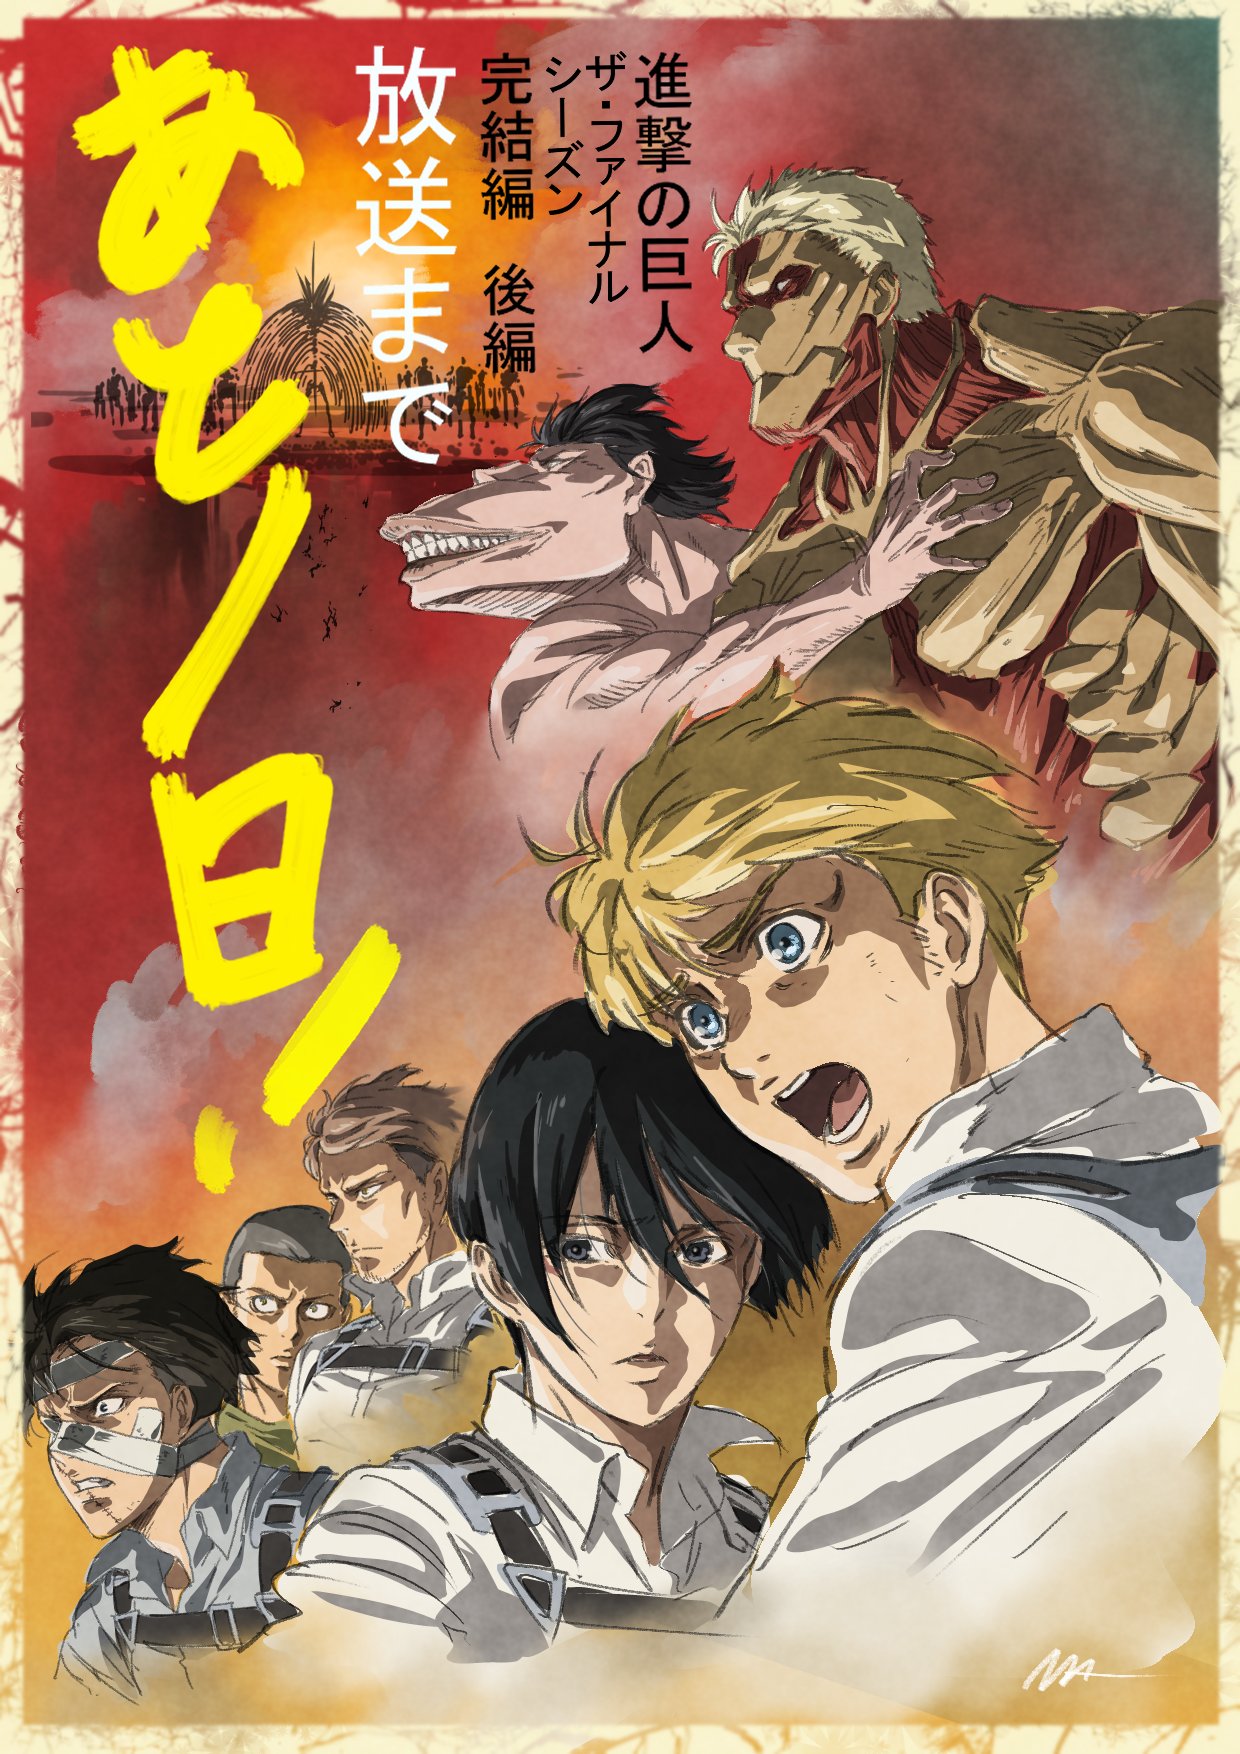 Countdown to Yes (manga) - Anime News Network